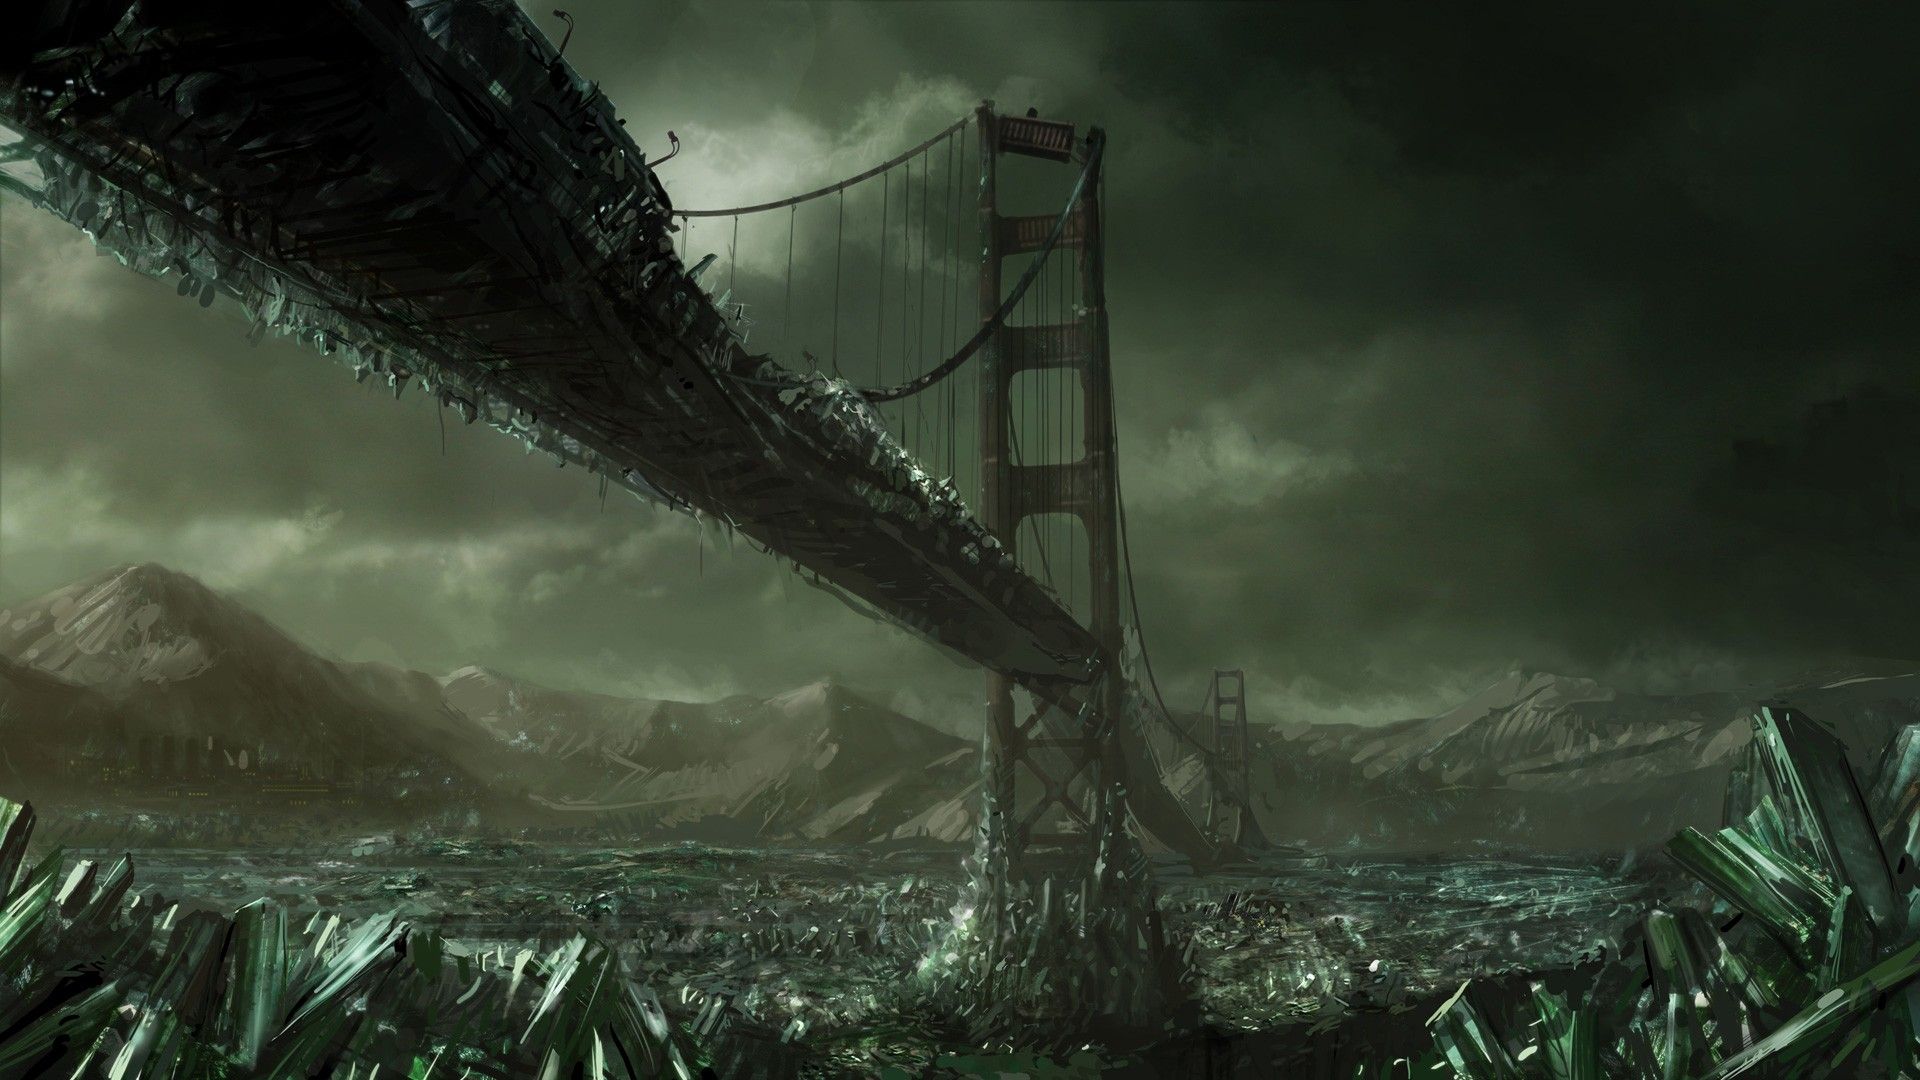 Fondos de pantalla: noche, apocalíptico, puente, San Francisco, barco fantasma